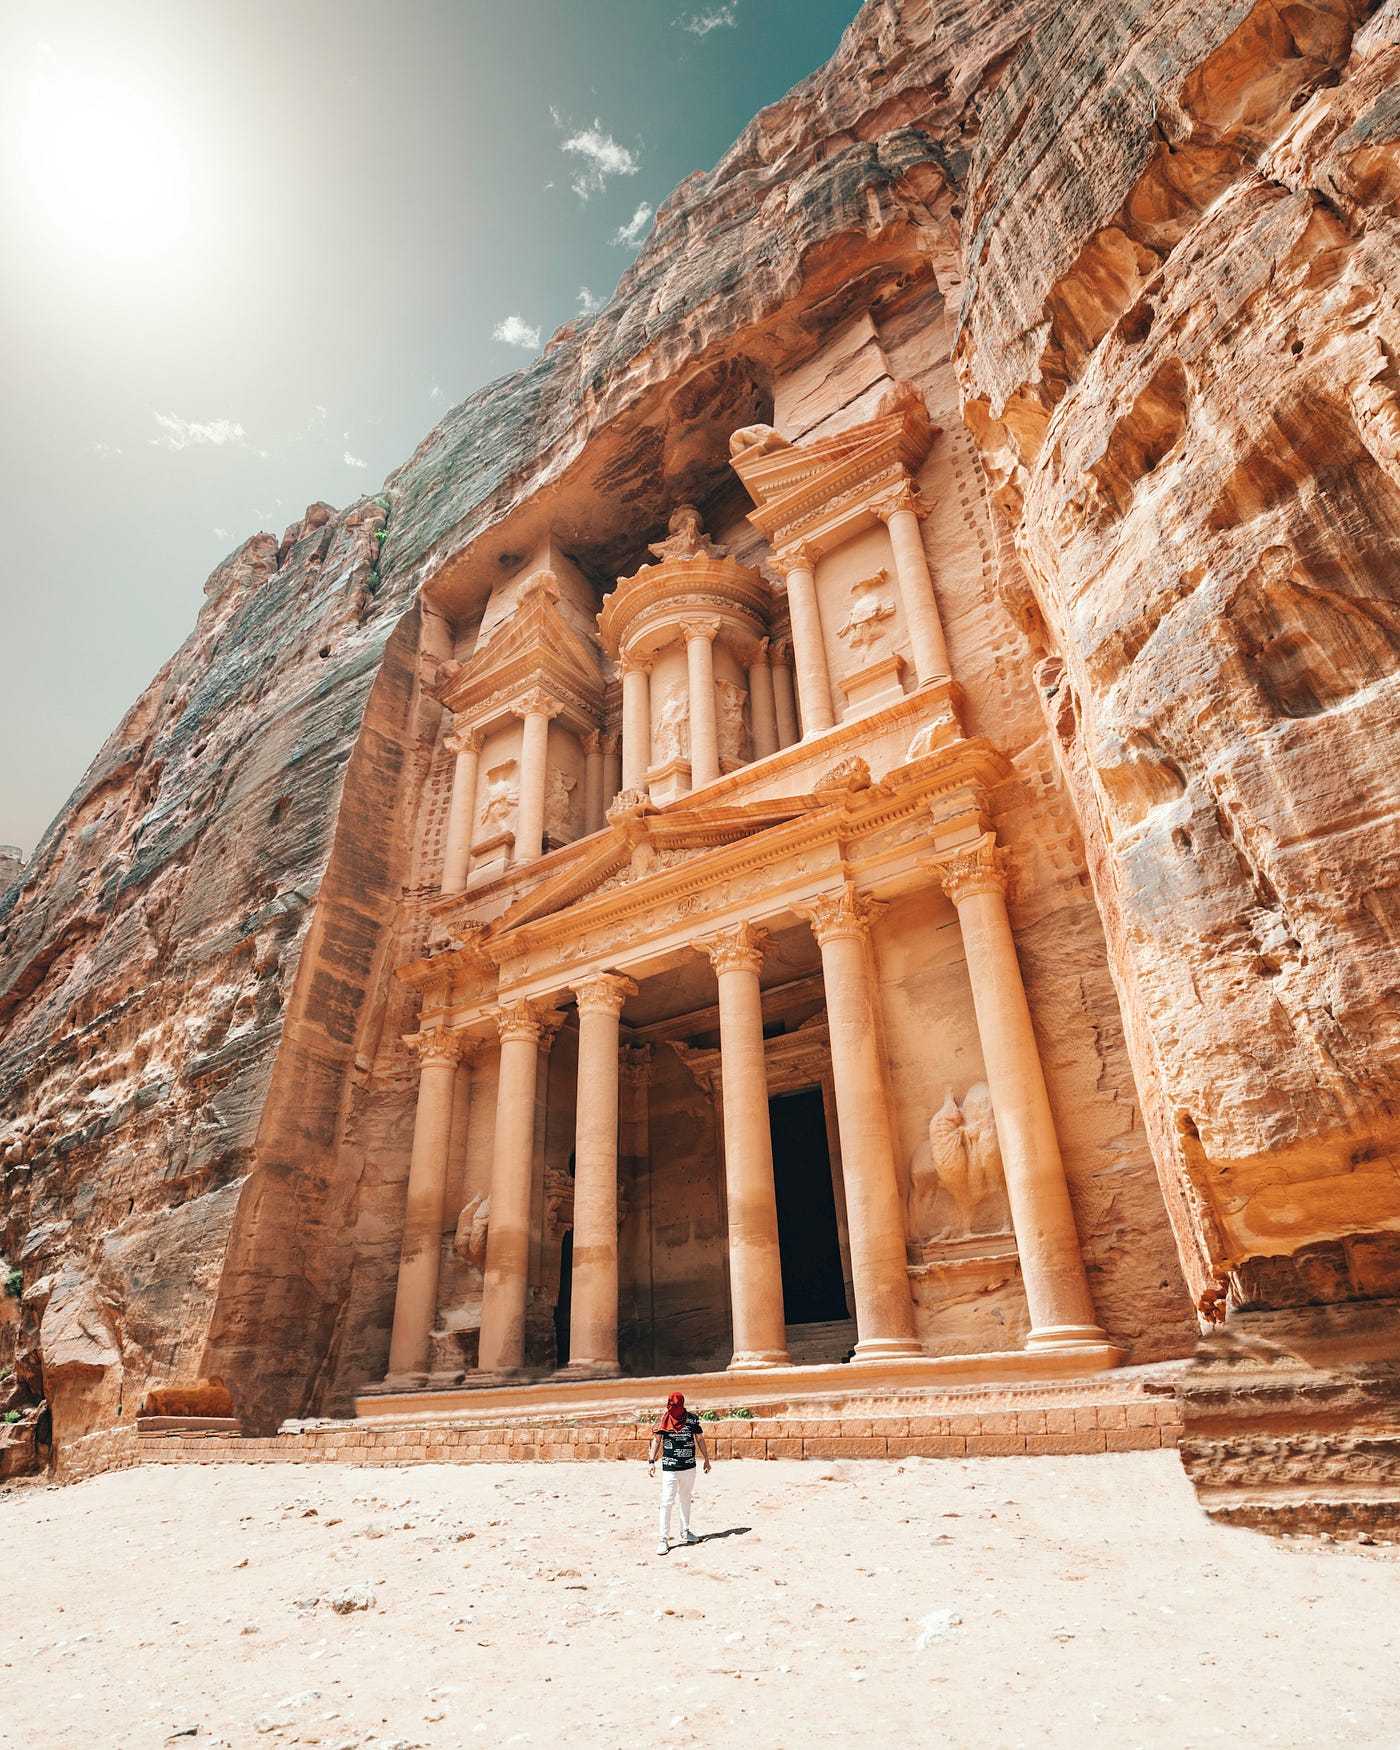 Petra in Jordan: A journey into the lost city | by Briana Smith | Medium